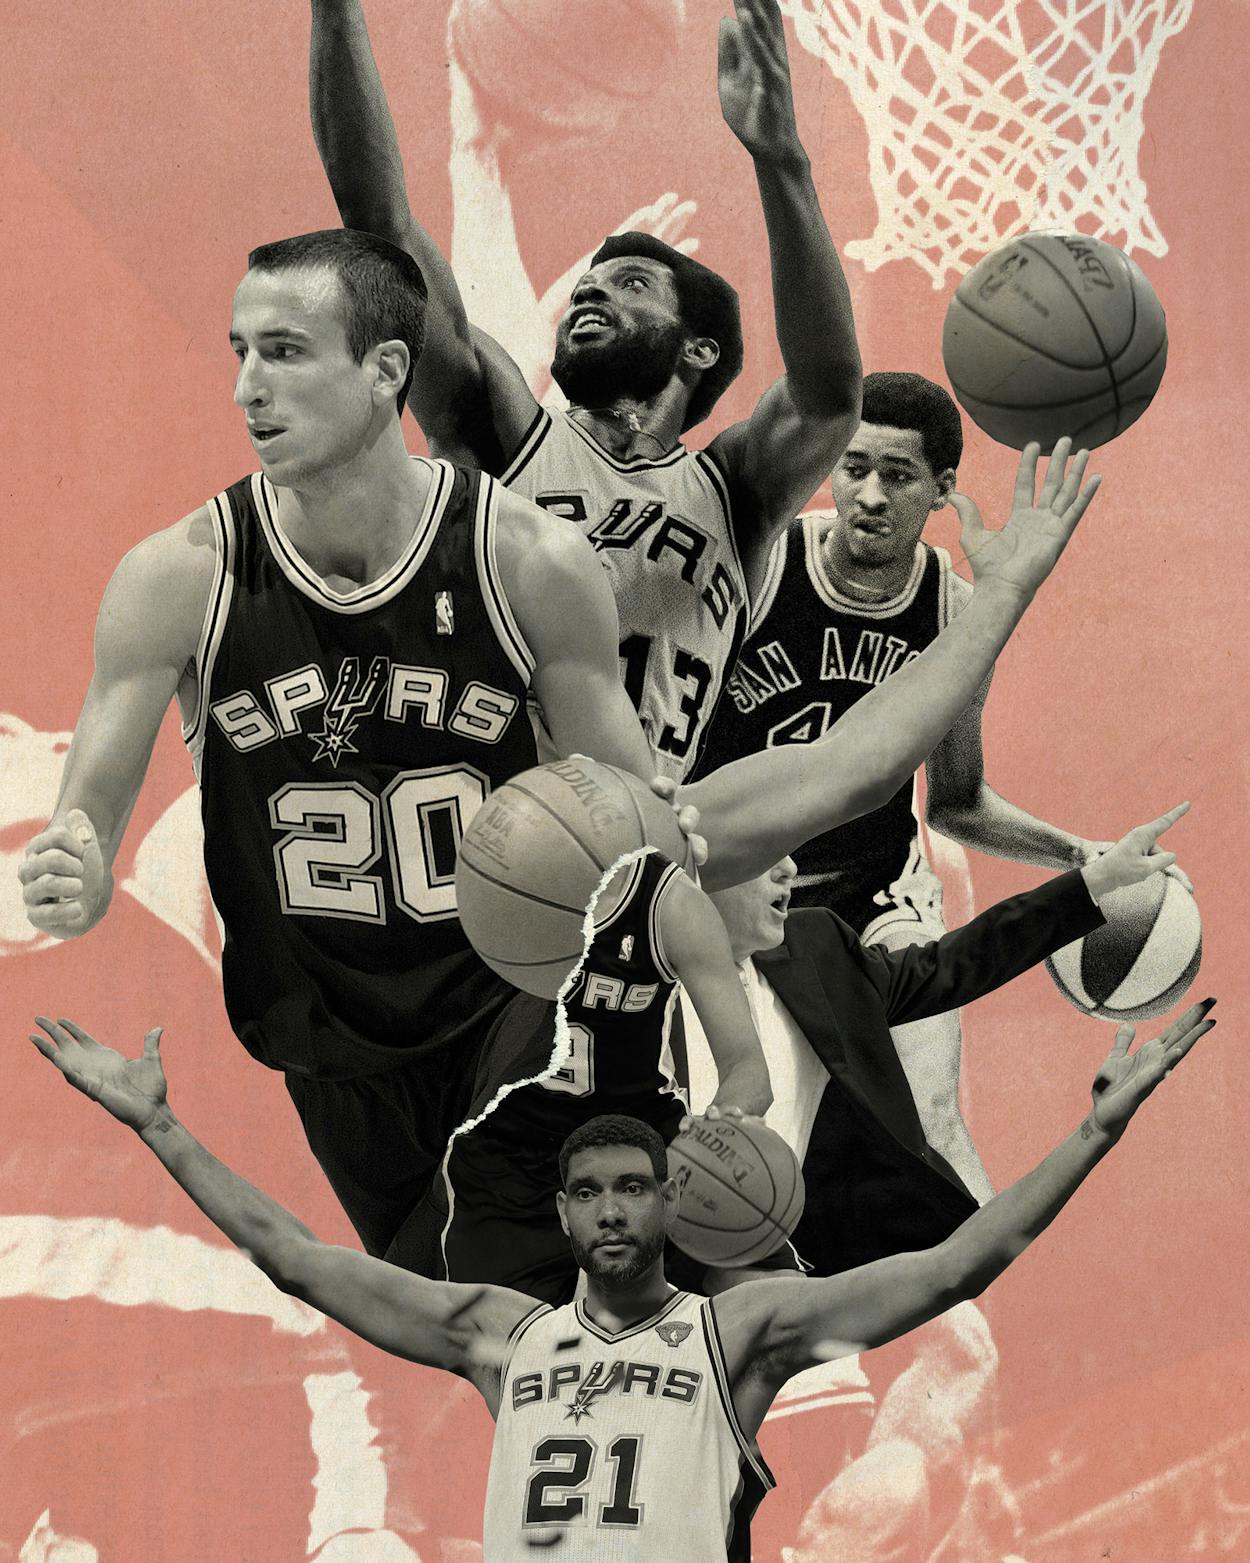 San Antonio Spurs Road Uniform - National Basketball Association